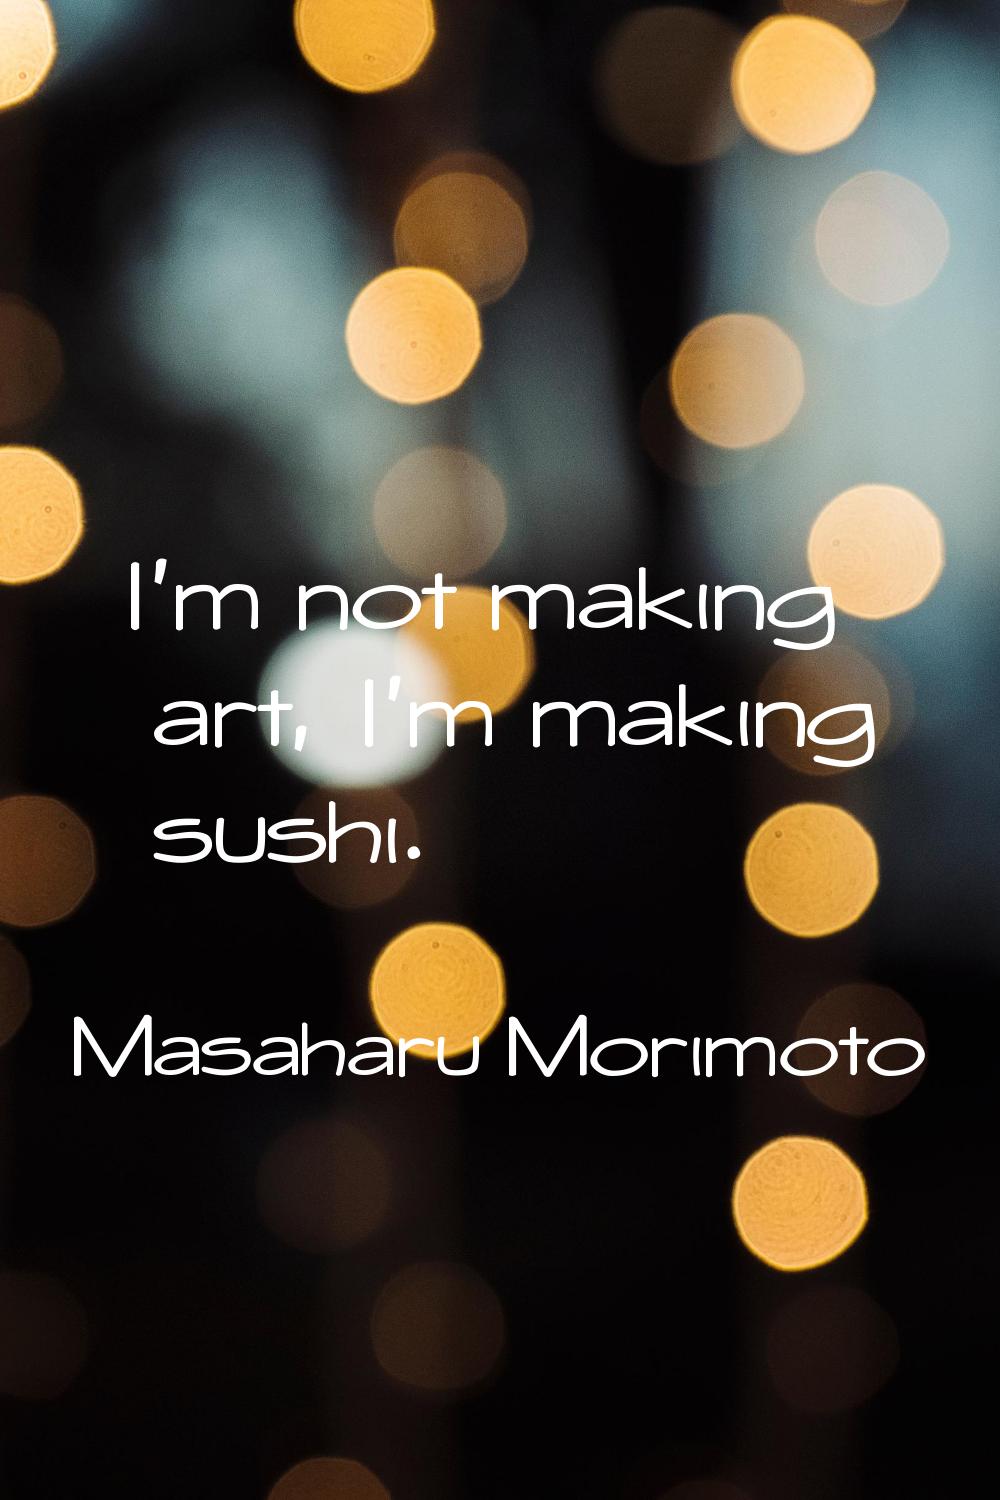 I'm not making art, I'm making sushi.